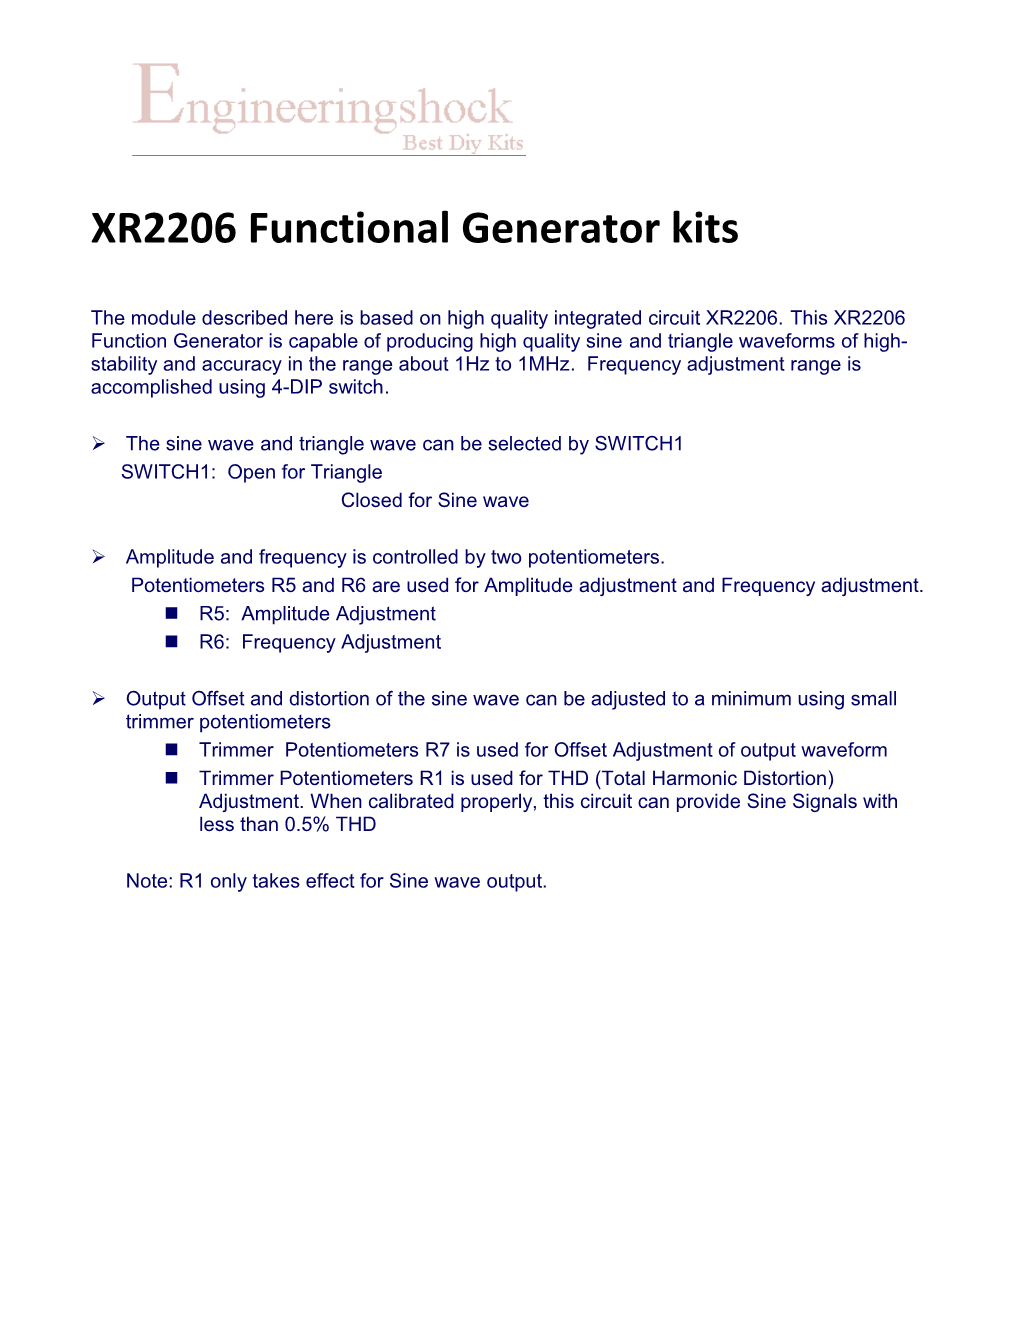 XR2206 Functional Generator Kits